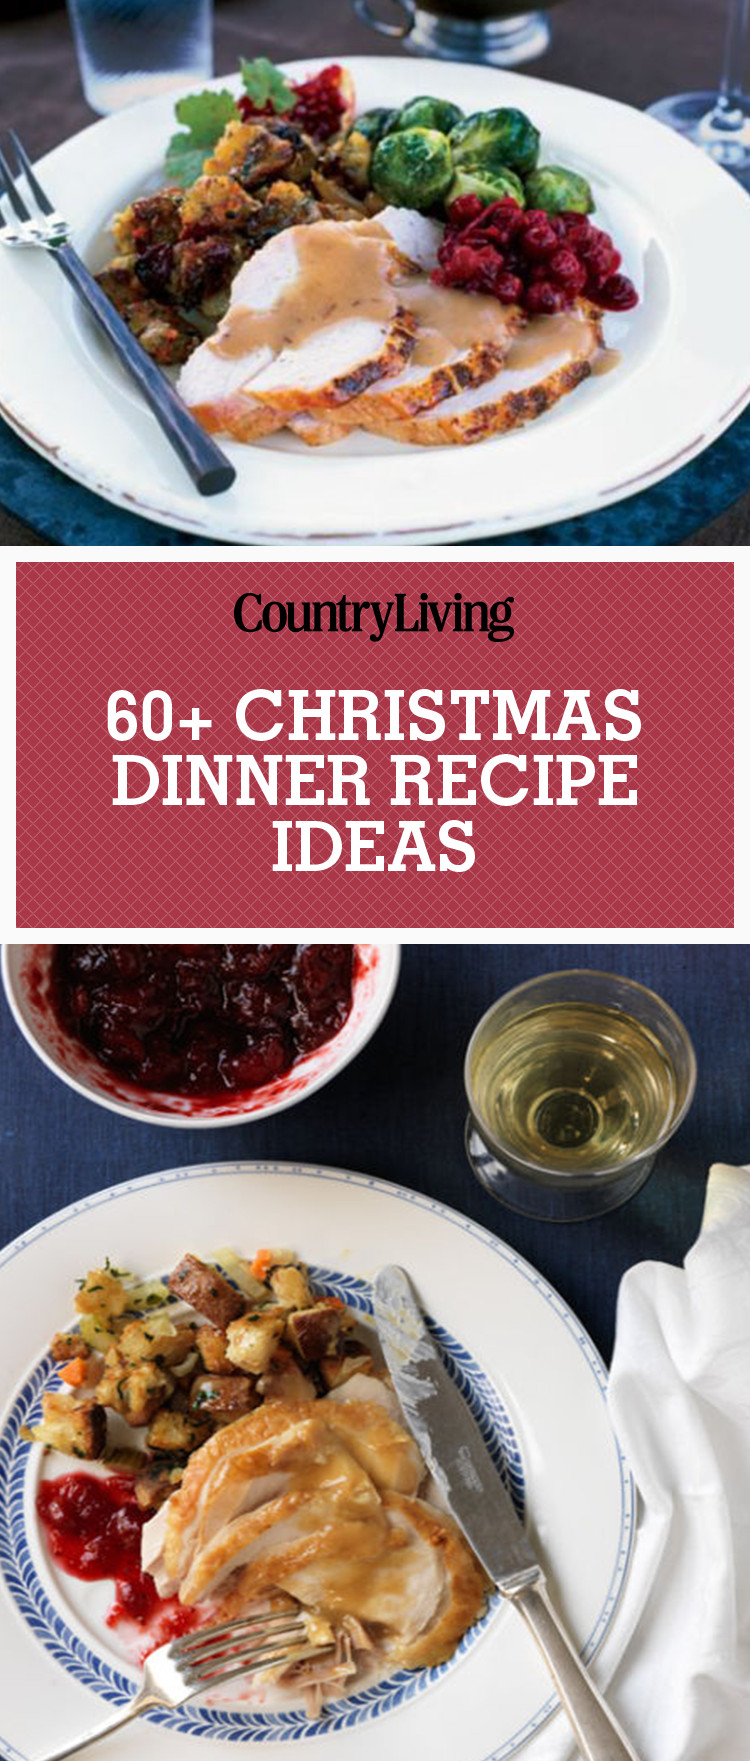 Easy Christmas Dinner Ideas
 70 Easy Christmas Dinner Ideas Best Holiday Meal Recipes